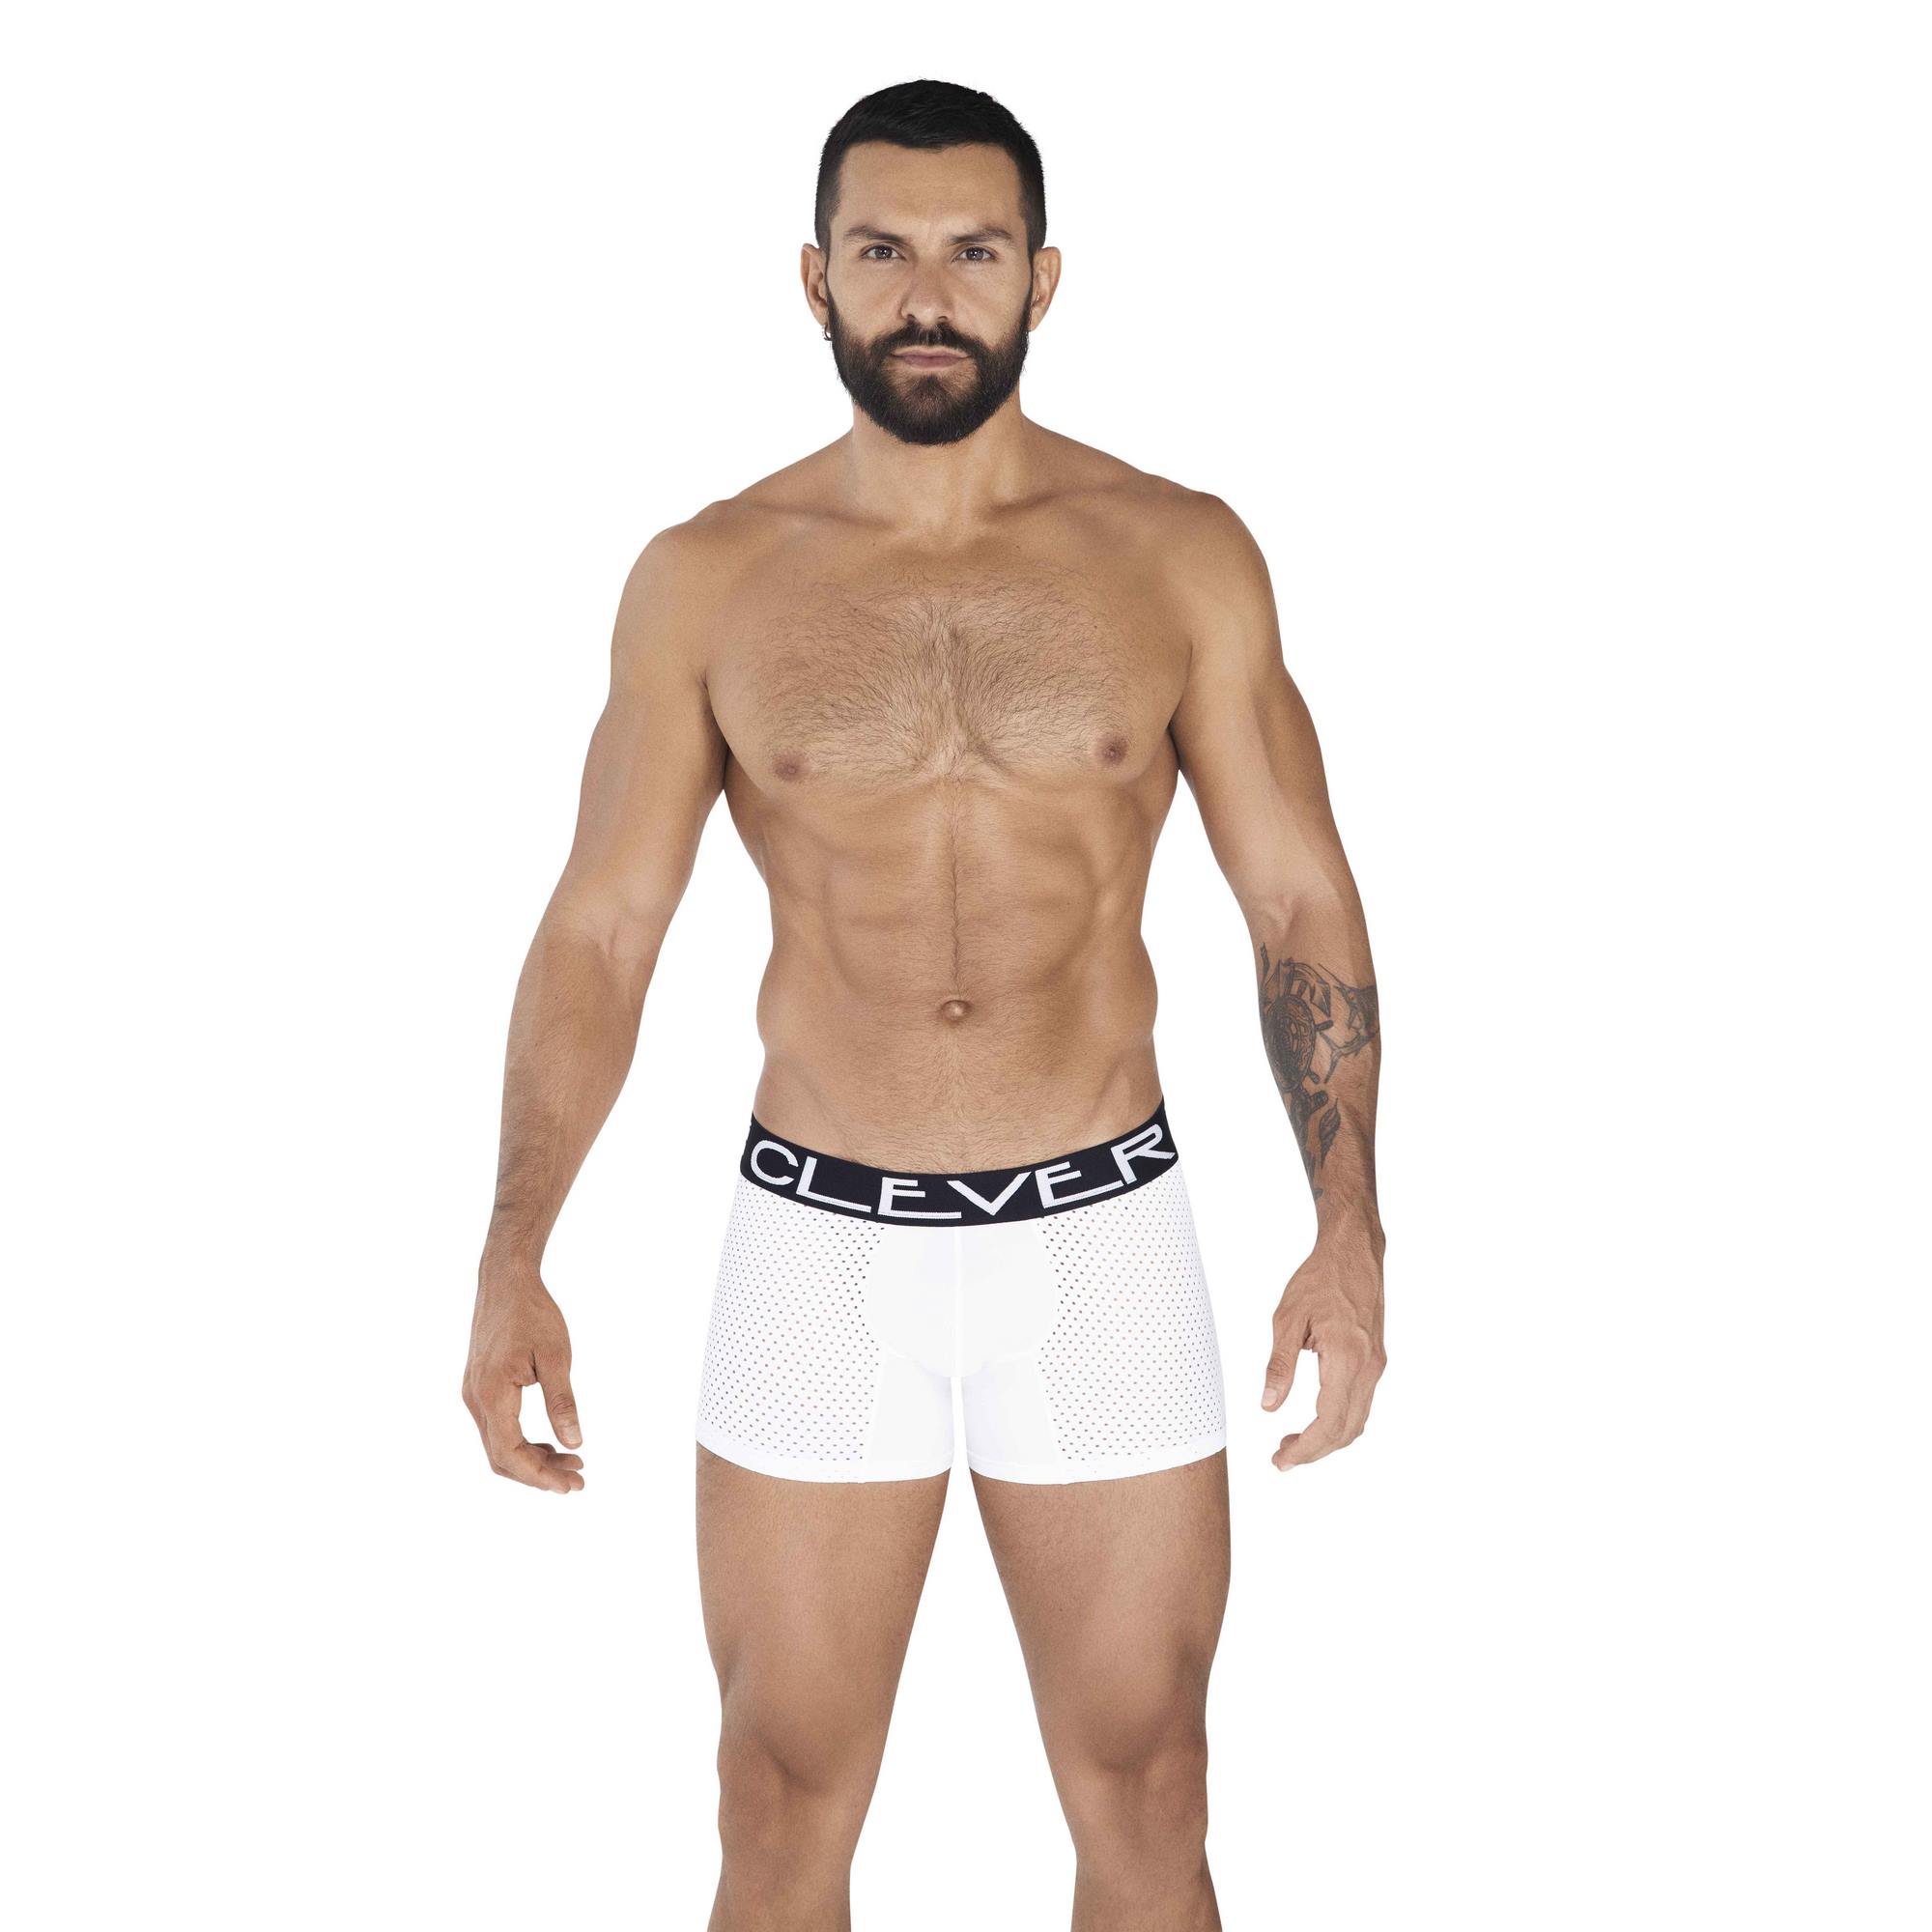 Трусы мужские Clever Masculine Underwear 0361 белые L